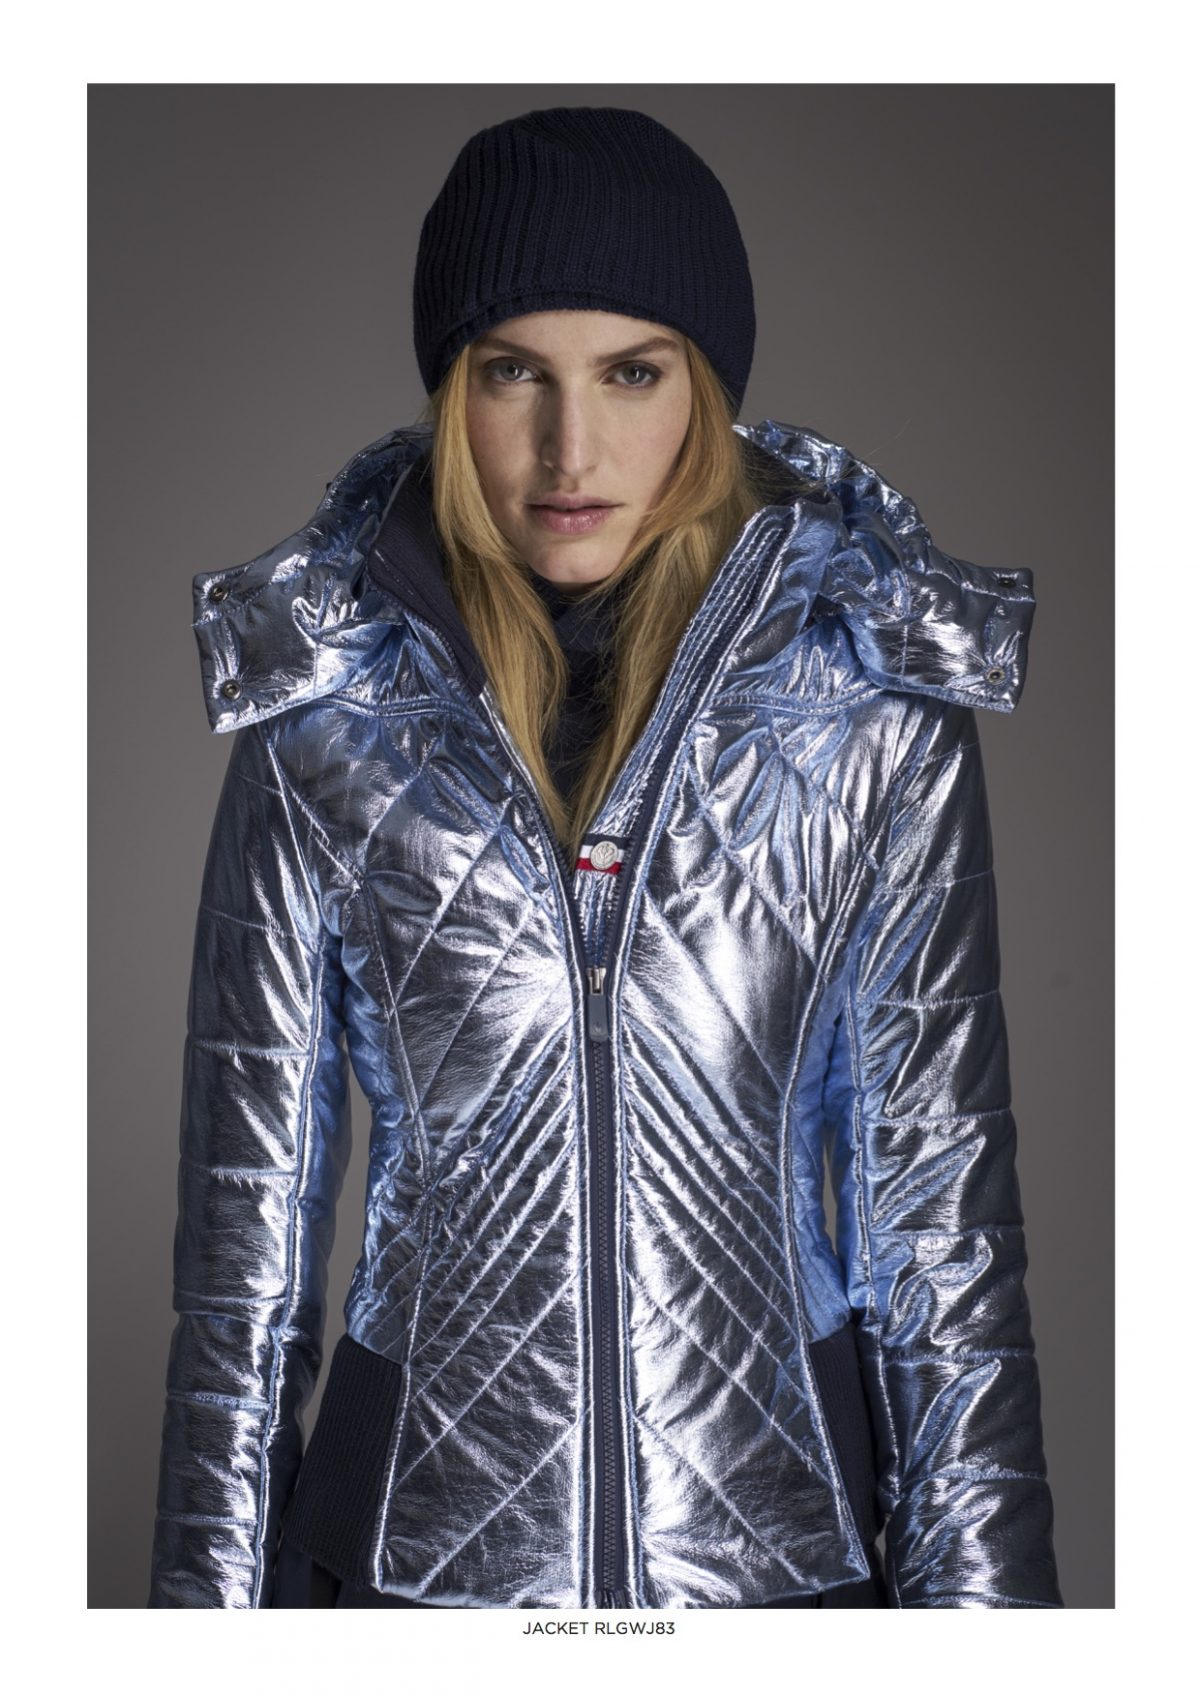 The Rossignol metallic ski jacket